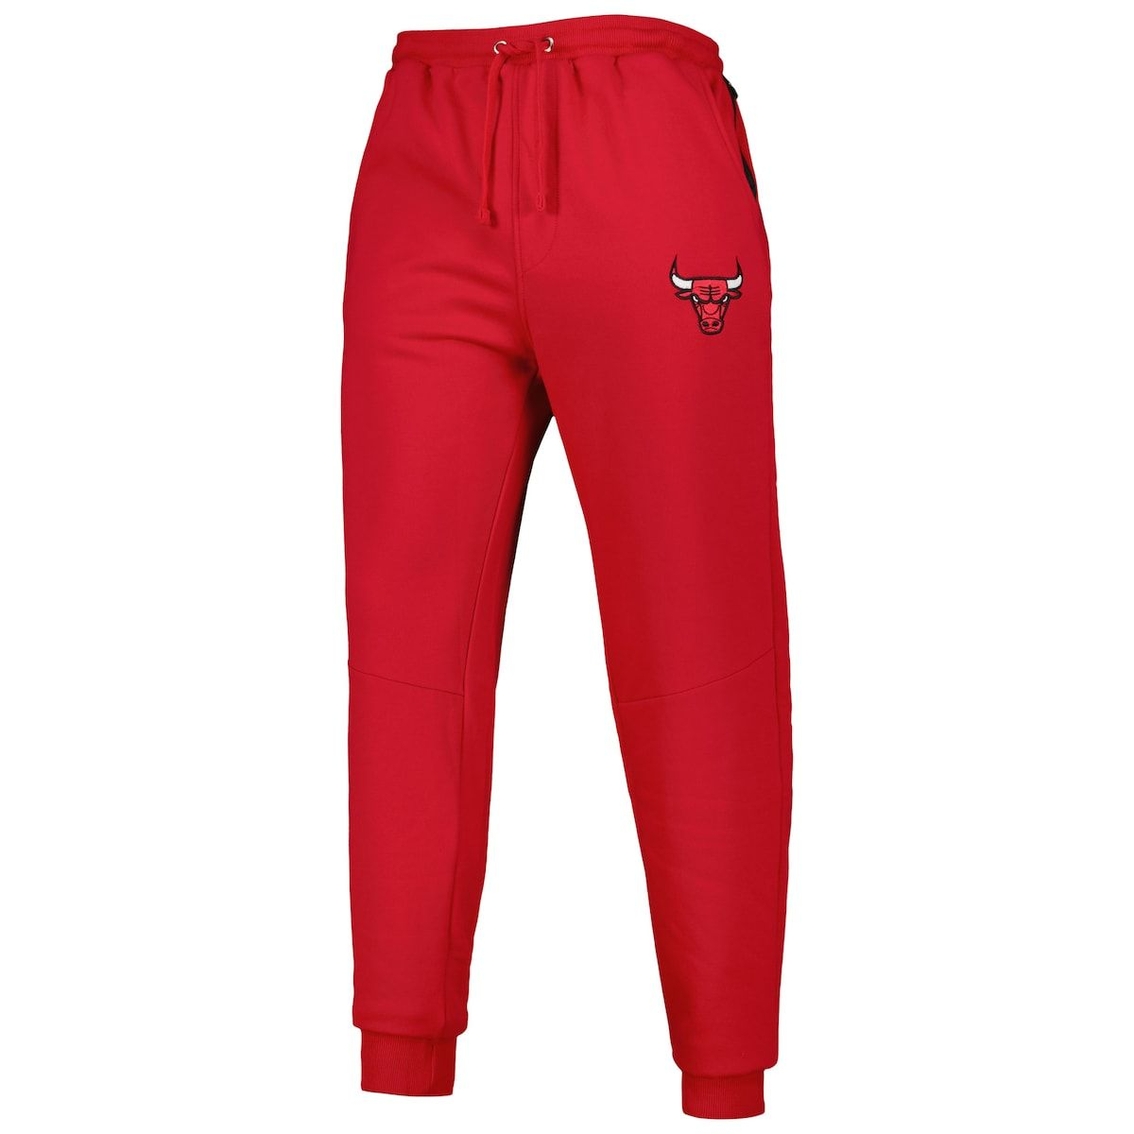 Fanatics Branded Men's Red Chicago Bulls Jogger Pants - Image 3 of 4